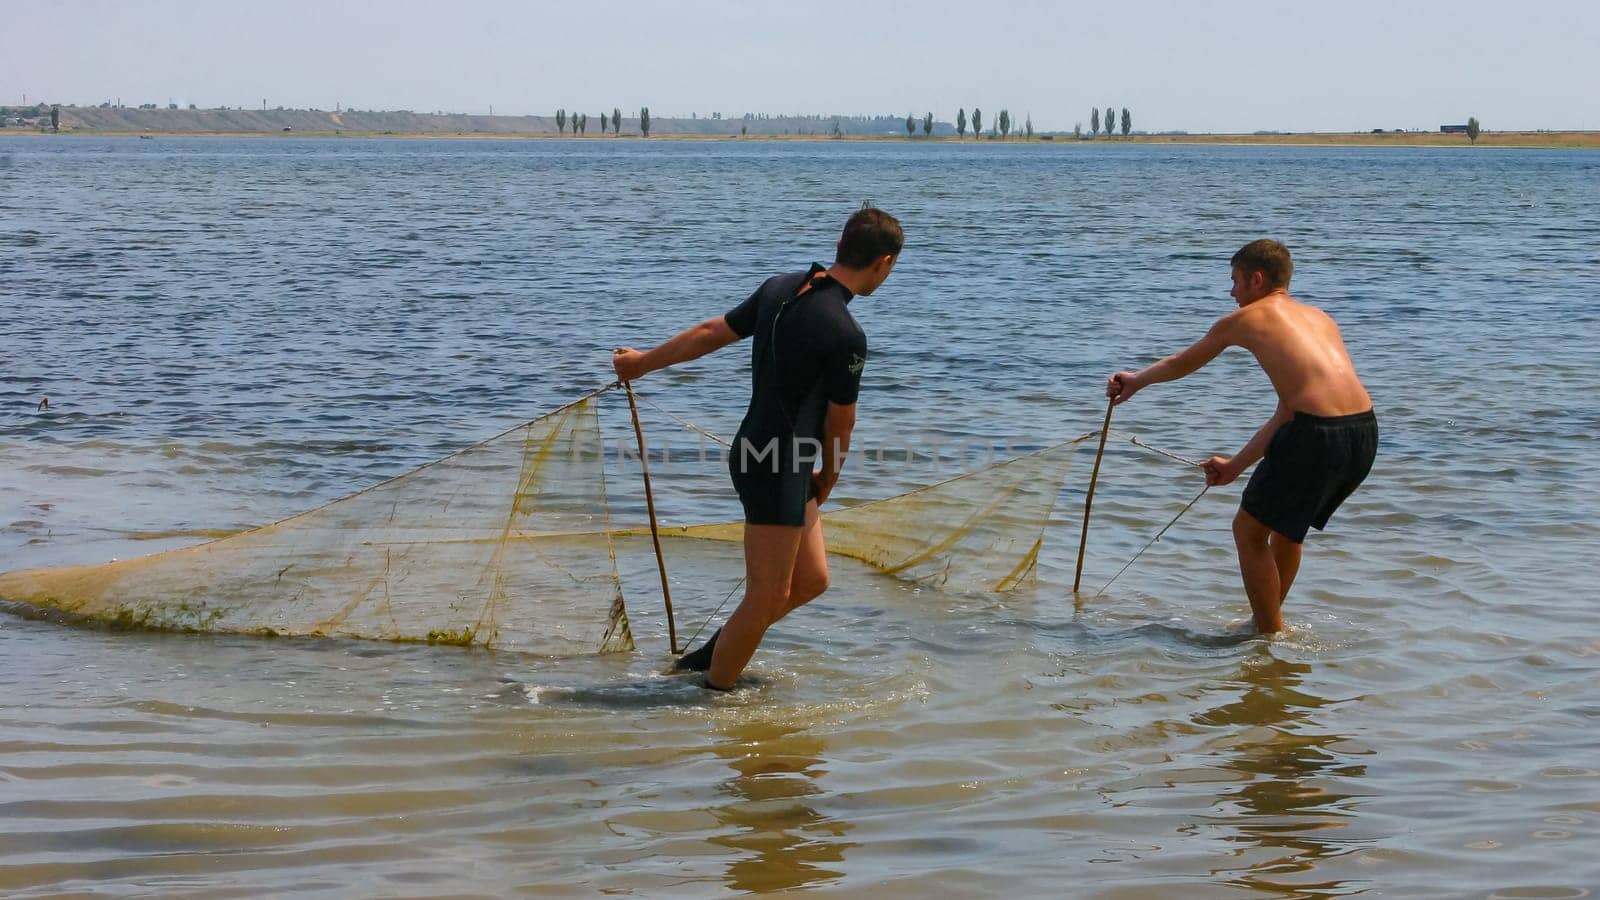 ODESSA, UKRAINE - JUNE 30, 2007: Fishermen catch fish with a net in a shallow pond, Tiligulsky Estuary Ukraine by Hydrobiolog